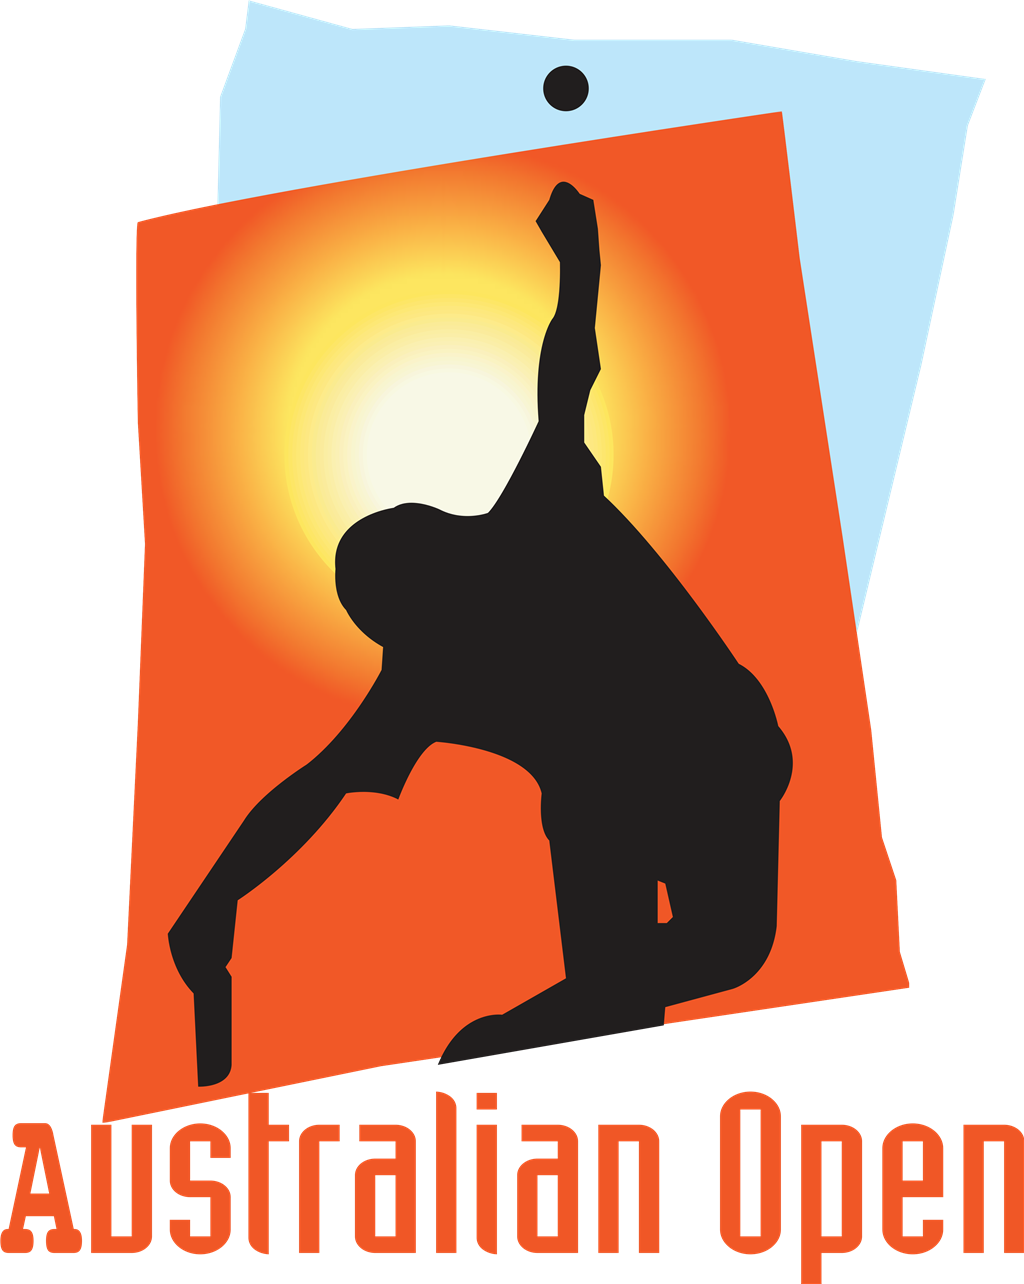 Australian Open logotype, transparent .png, medium, large